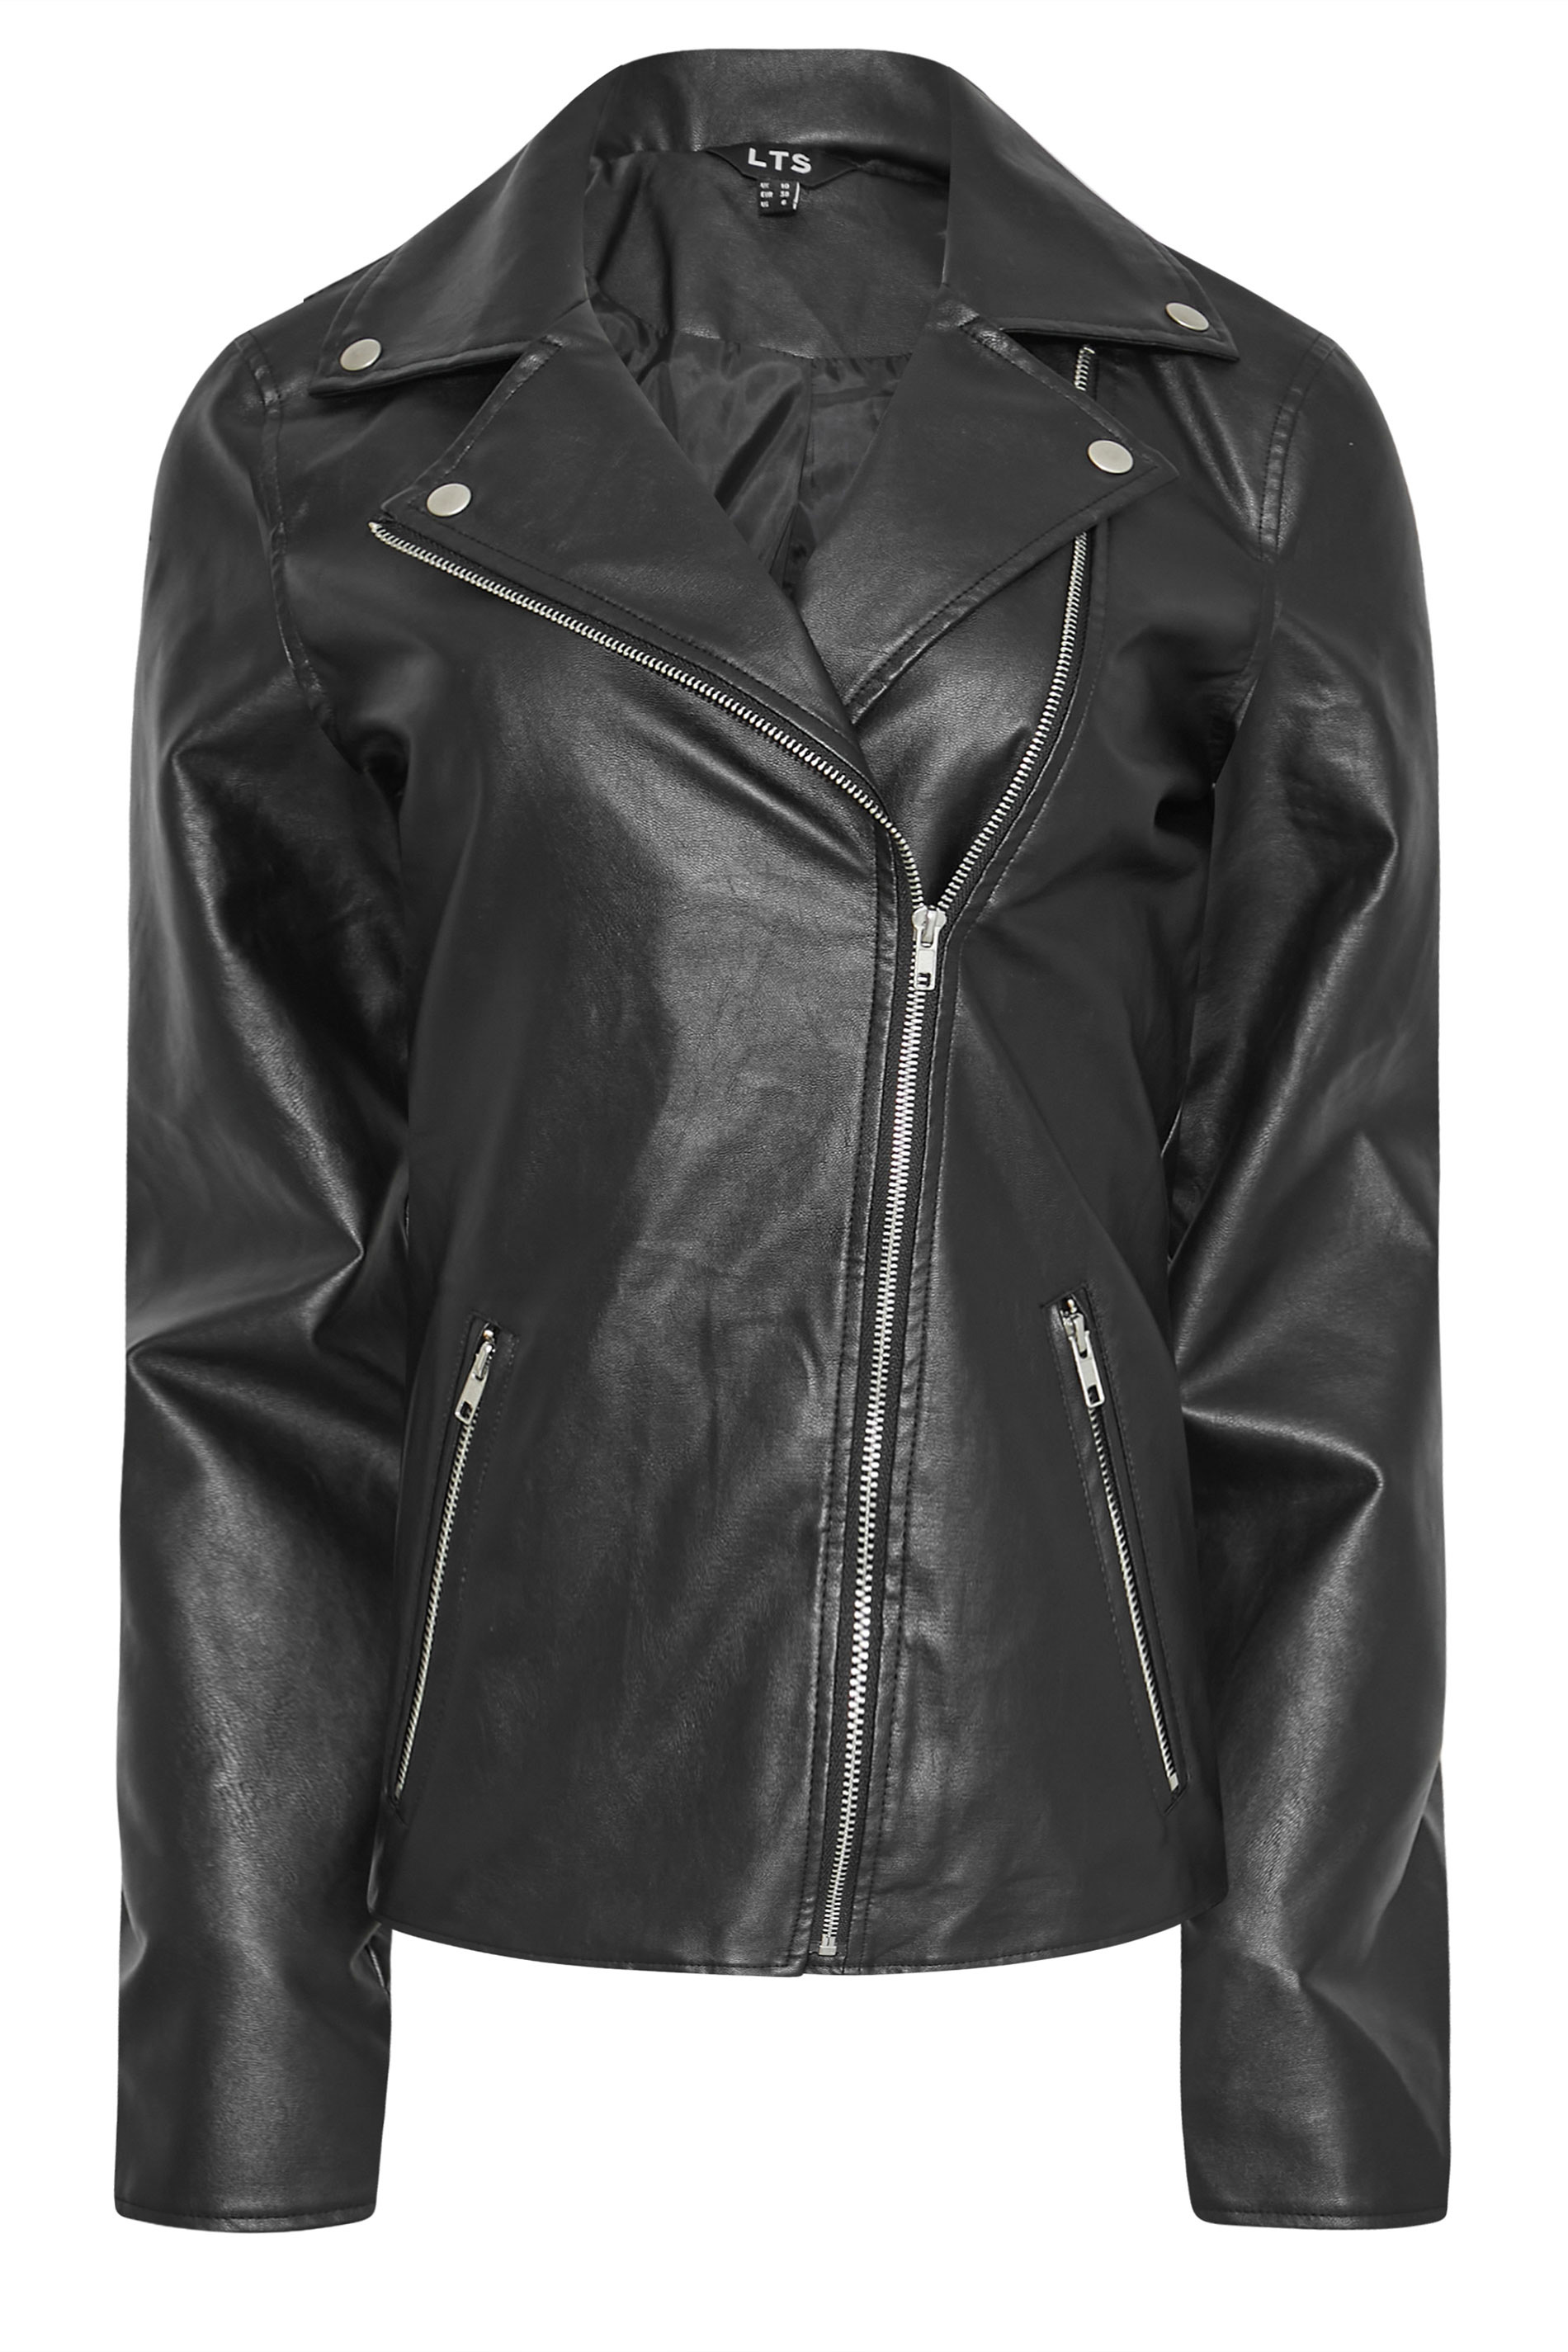 LTS Tall Women's Faux Leather Biker Jacket | Long Tall Sally 2